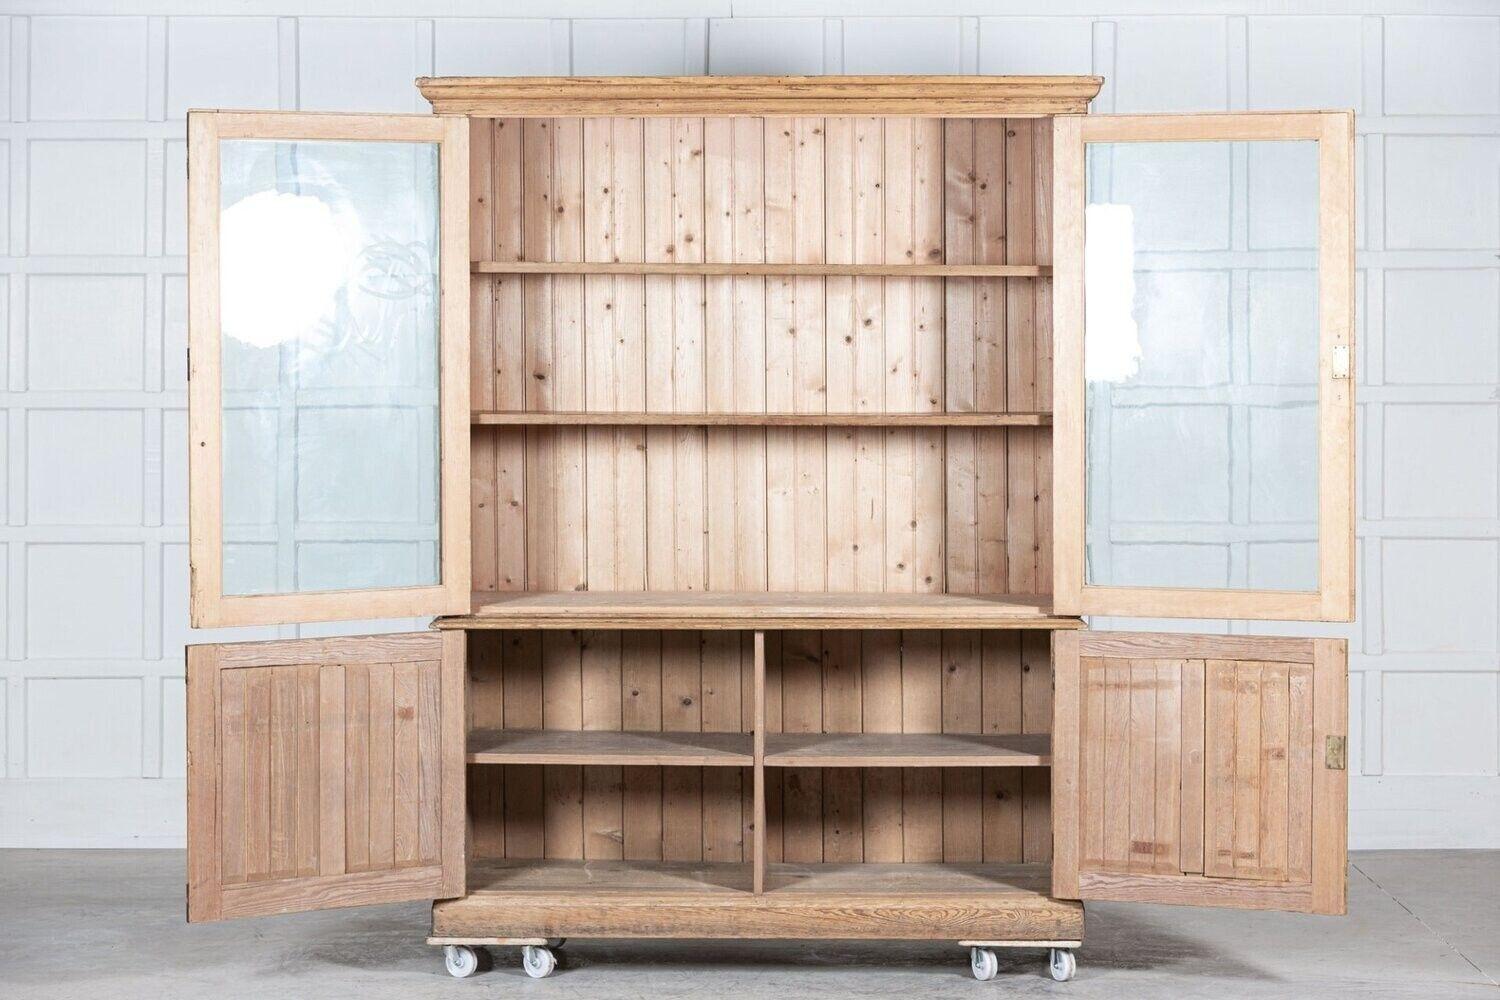 circa 1870
Large 19th C English pine glazed display cabinet / bookcase with key & adjustable shelves.
sku 1216
W164 x D59 x H206cm
Base W157 x D56 x H77cm
Top W164 x D59 x H129cm.